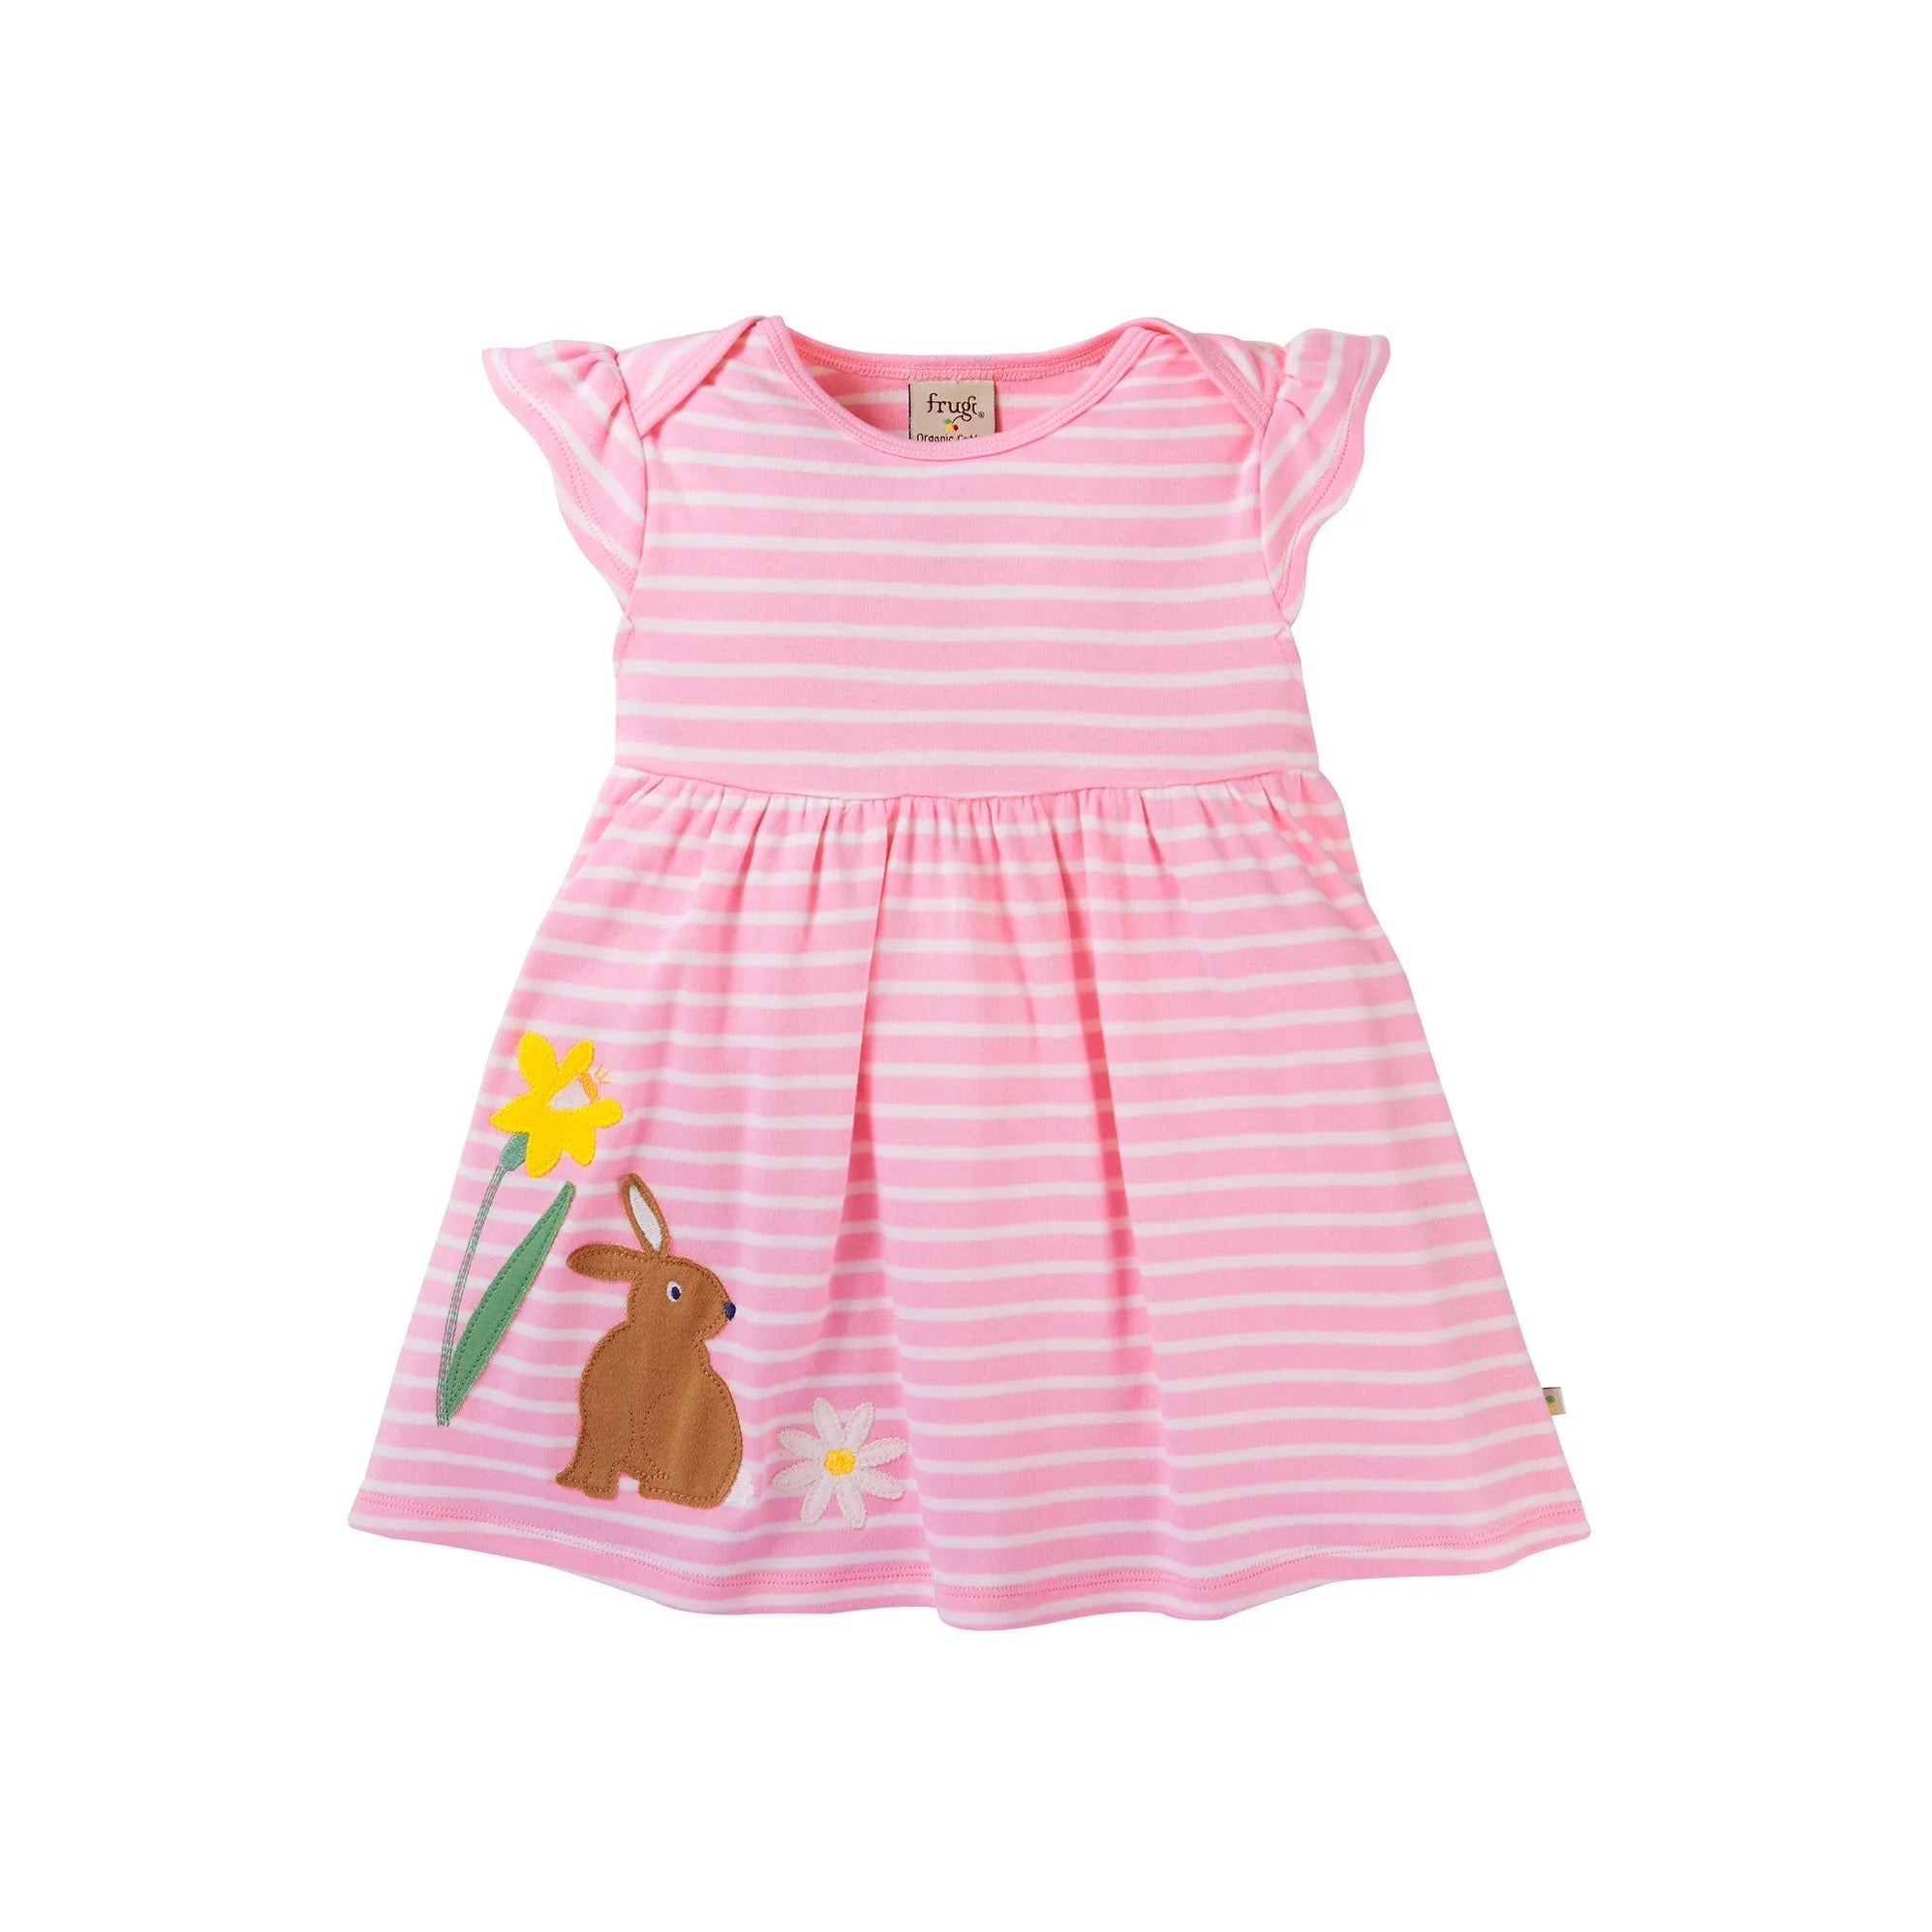 Frugi Bobby Infant Dress Pl4pi Rabbit Clothing 3-6M / Pink,6-9M / Pink,9-12M / Pink,12-18M / Pink